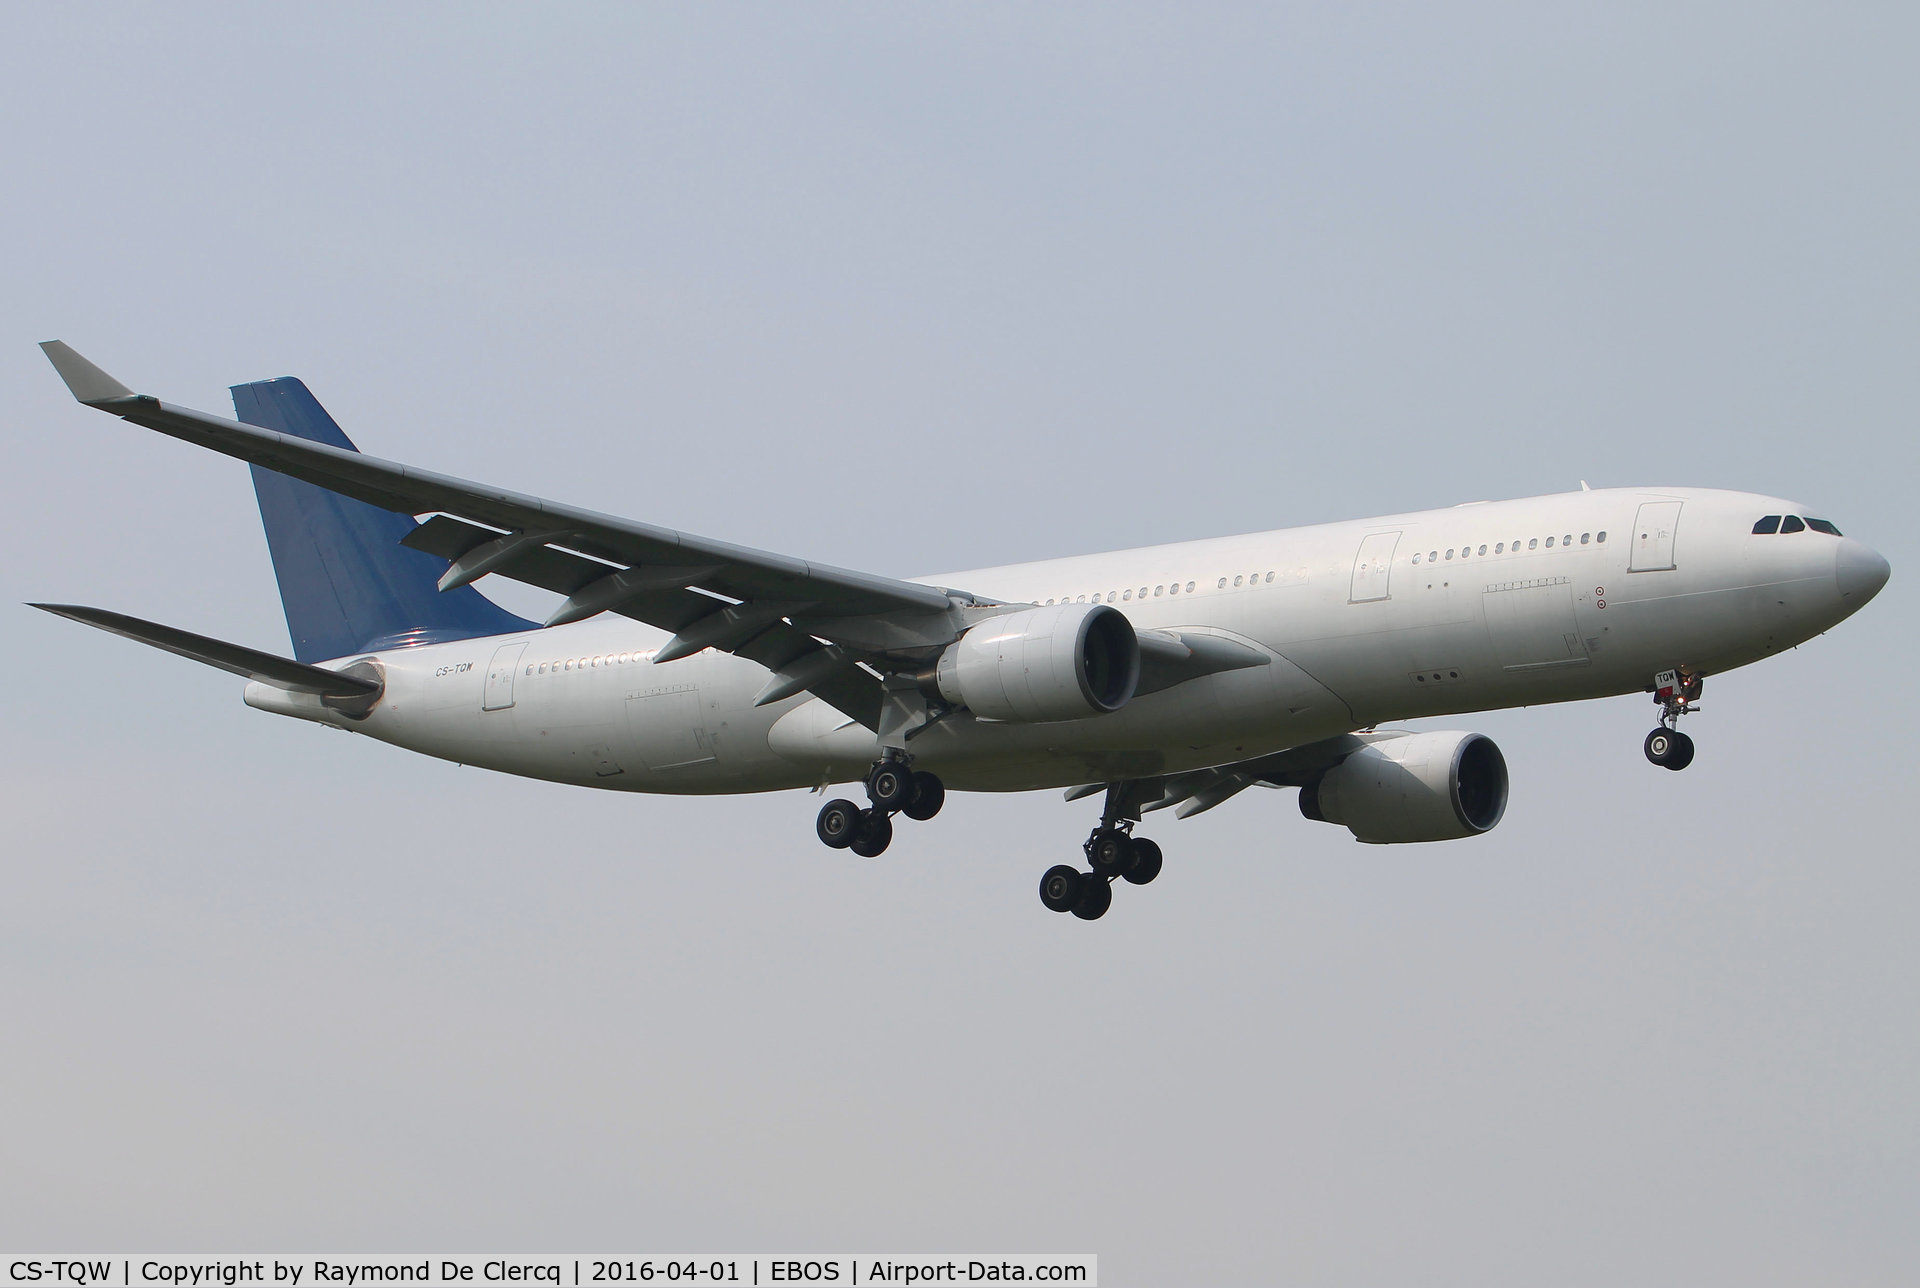 CS-TQW, 1999 Airbus A330-223 C/N 262, Landing at Ostend.